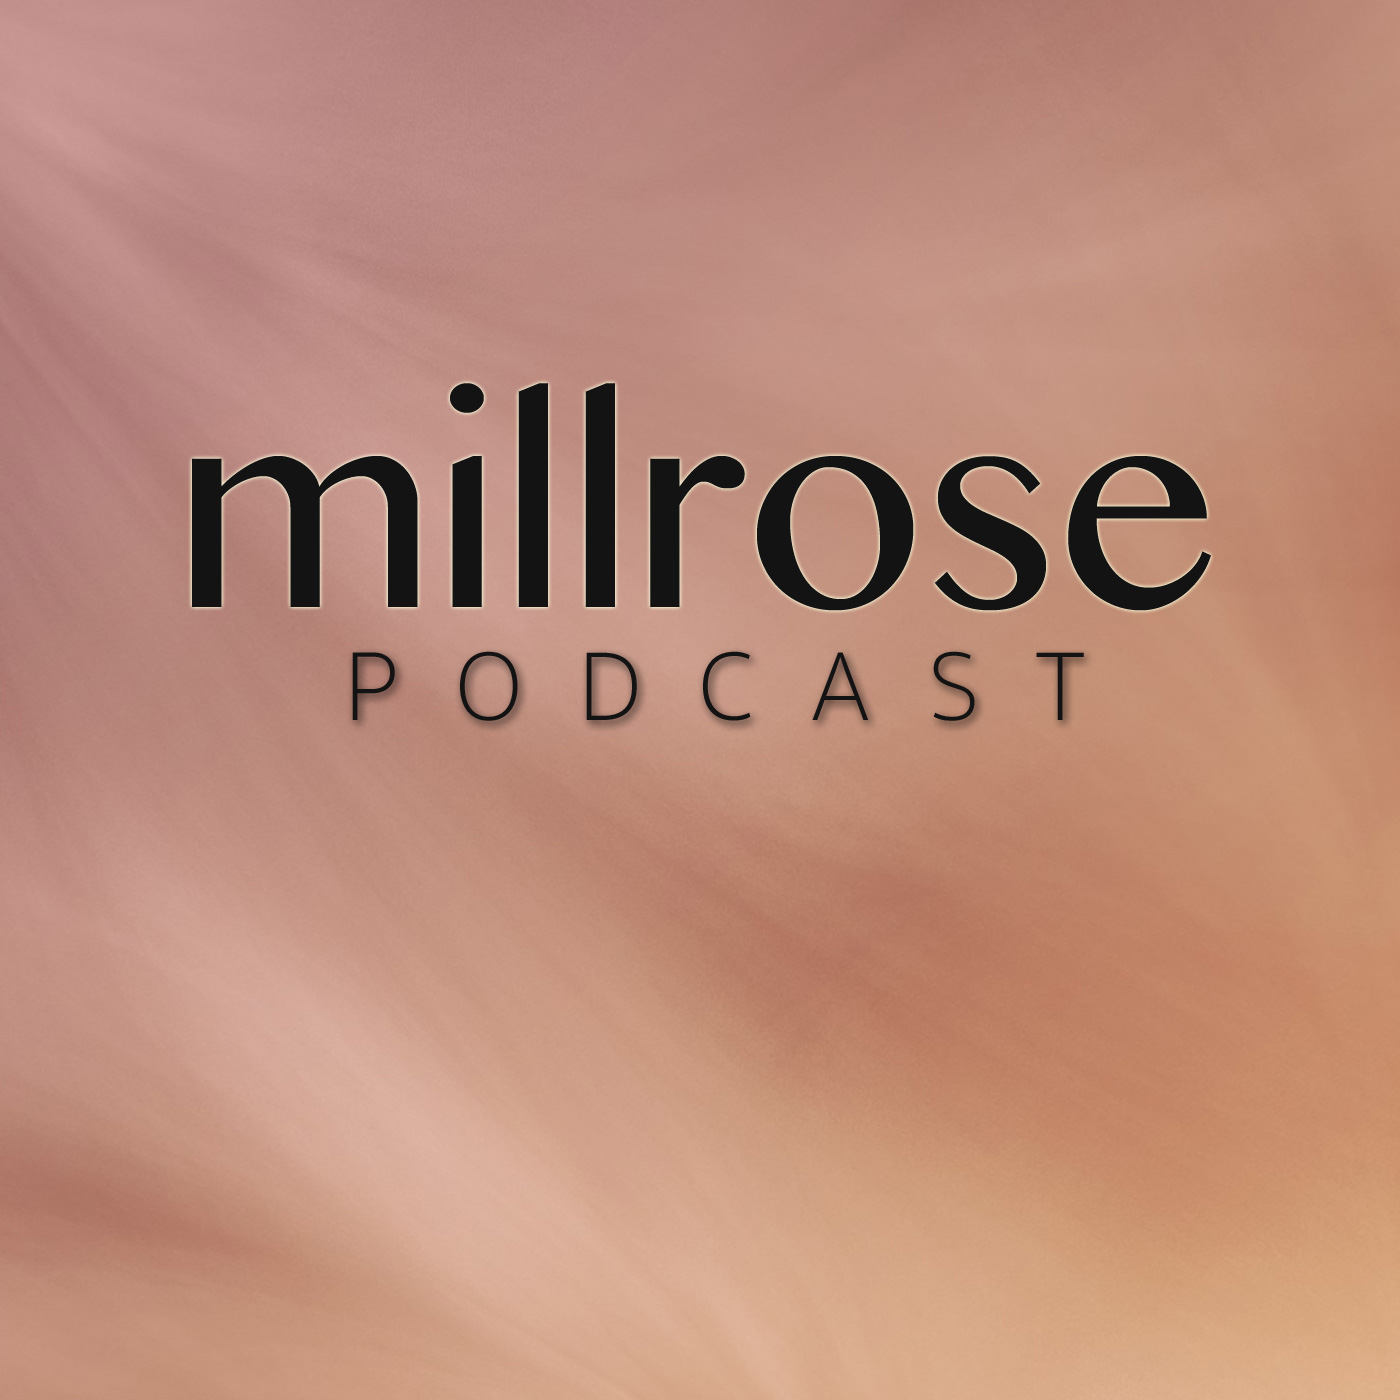 Millrose Podcast